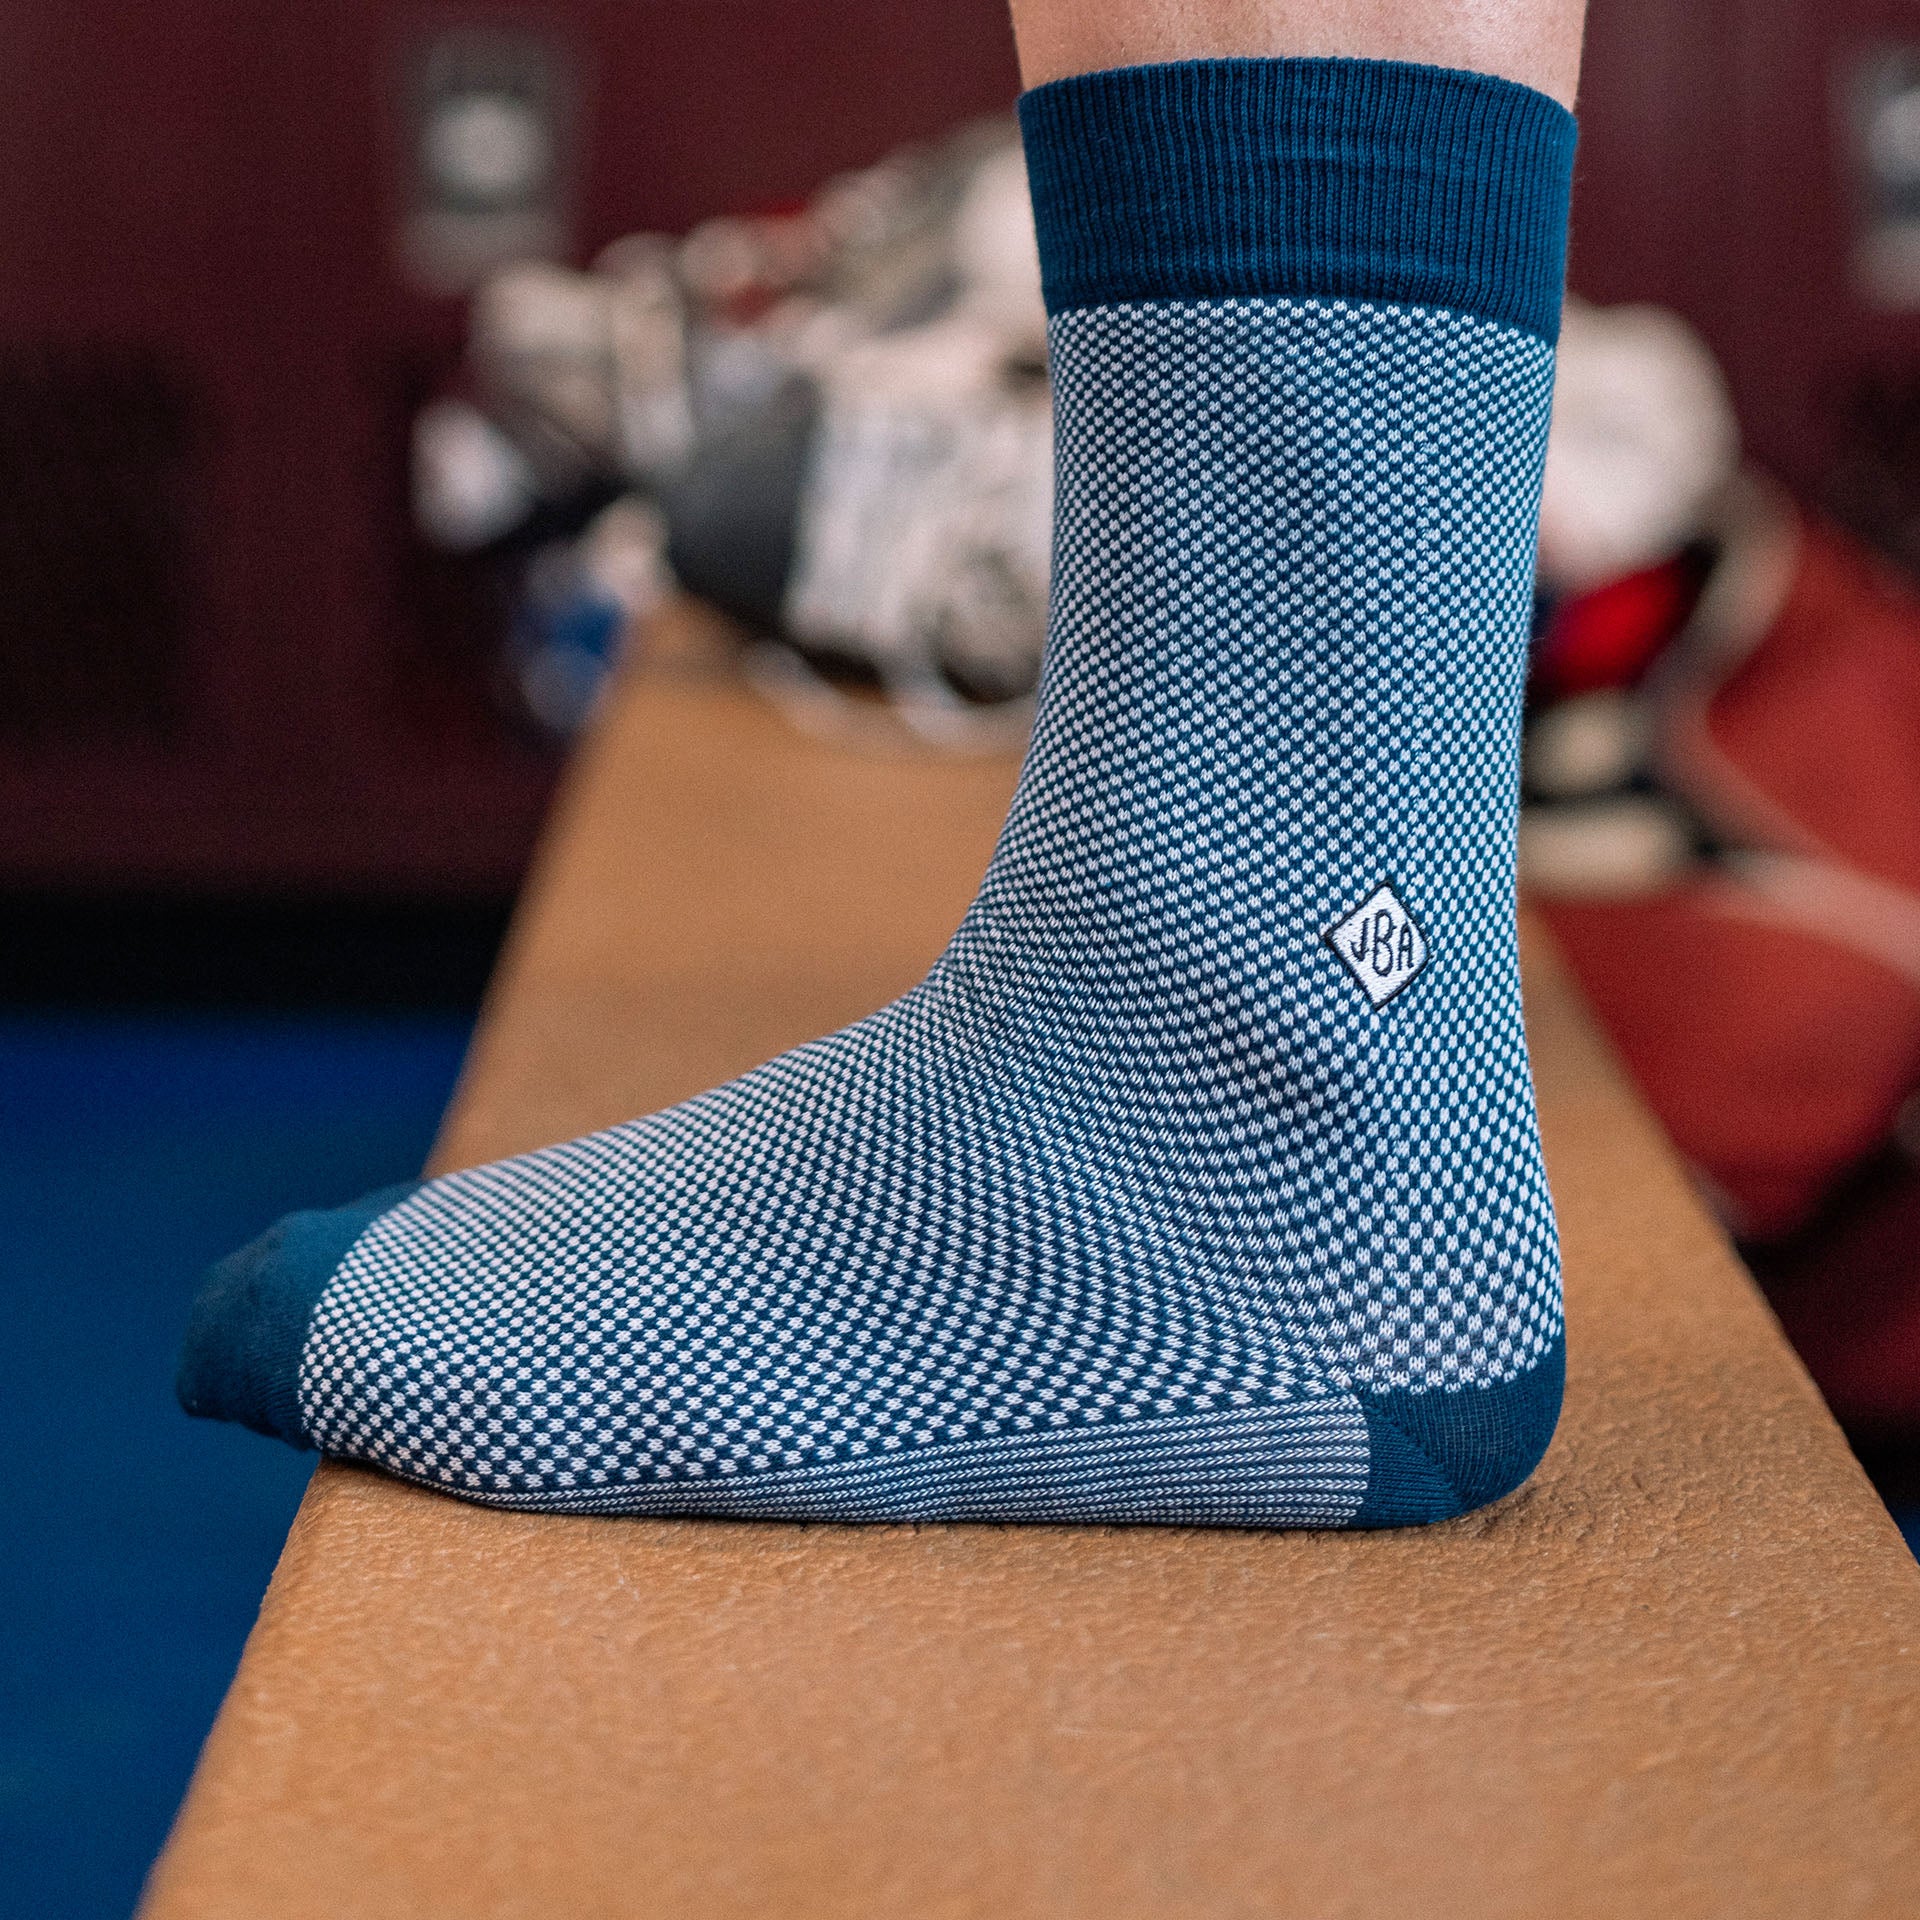 Close up shot of man's foot wearing blue Birdseye printed dress socks with initials "JBA" monogrammed on them.